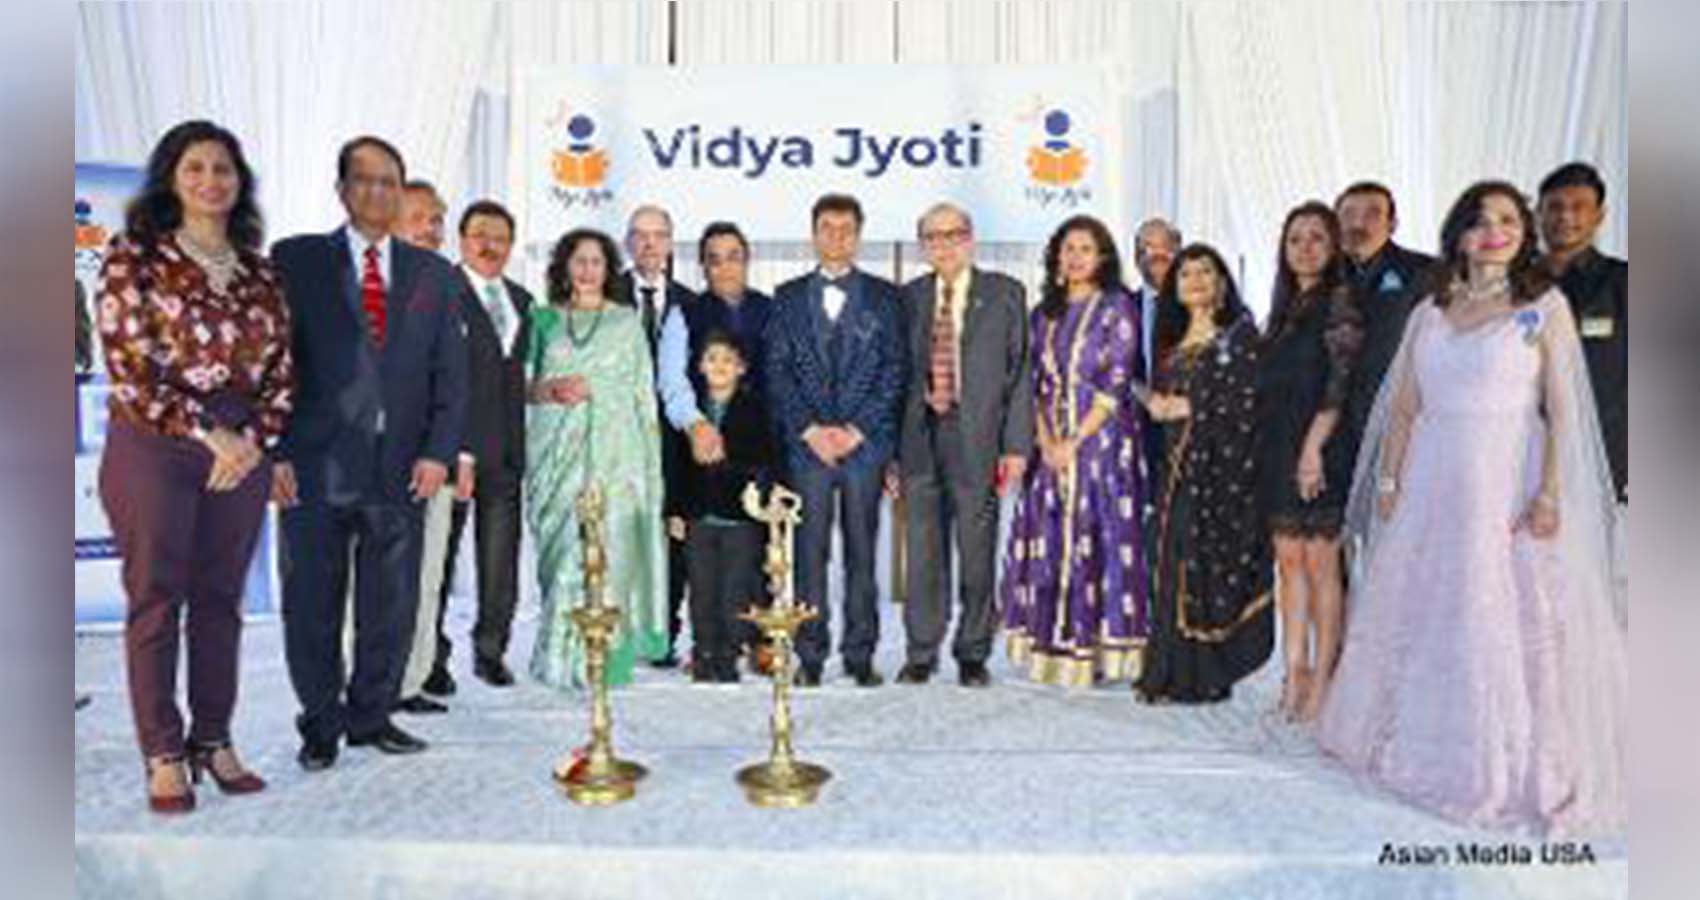 Vidya Jyoti Inaugurated in Chiacgo